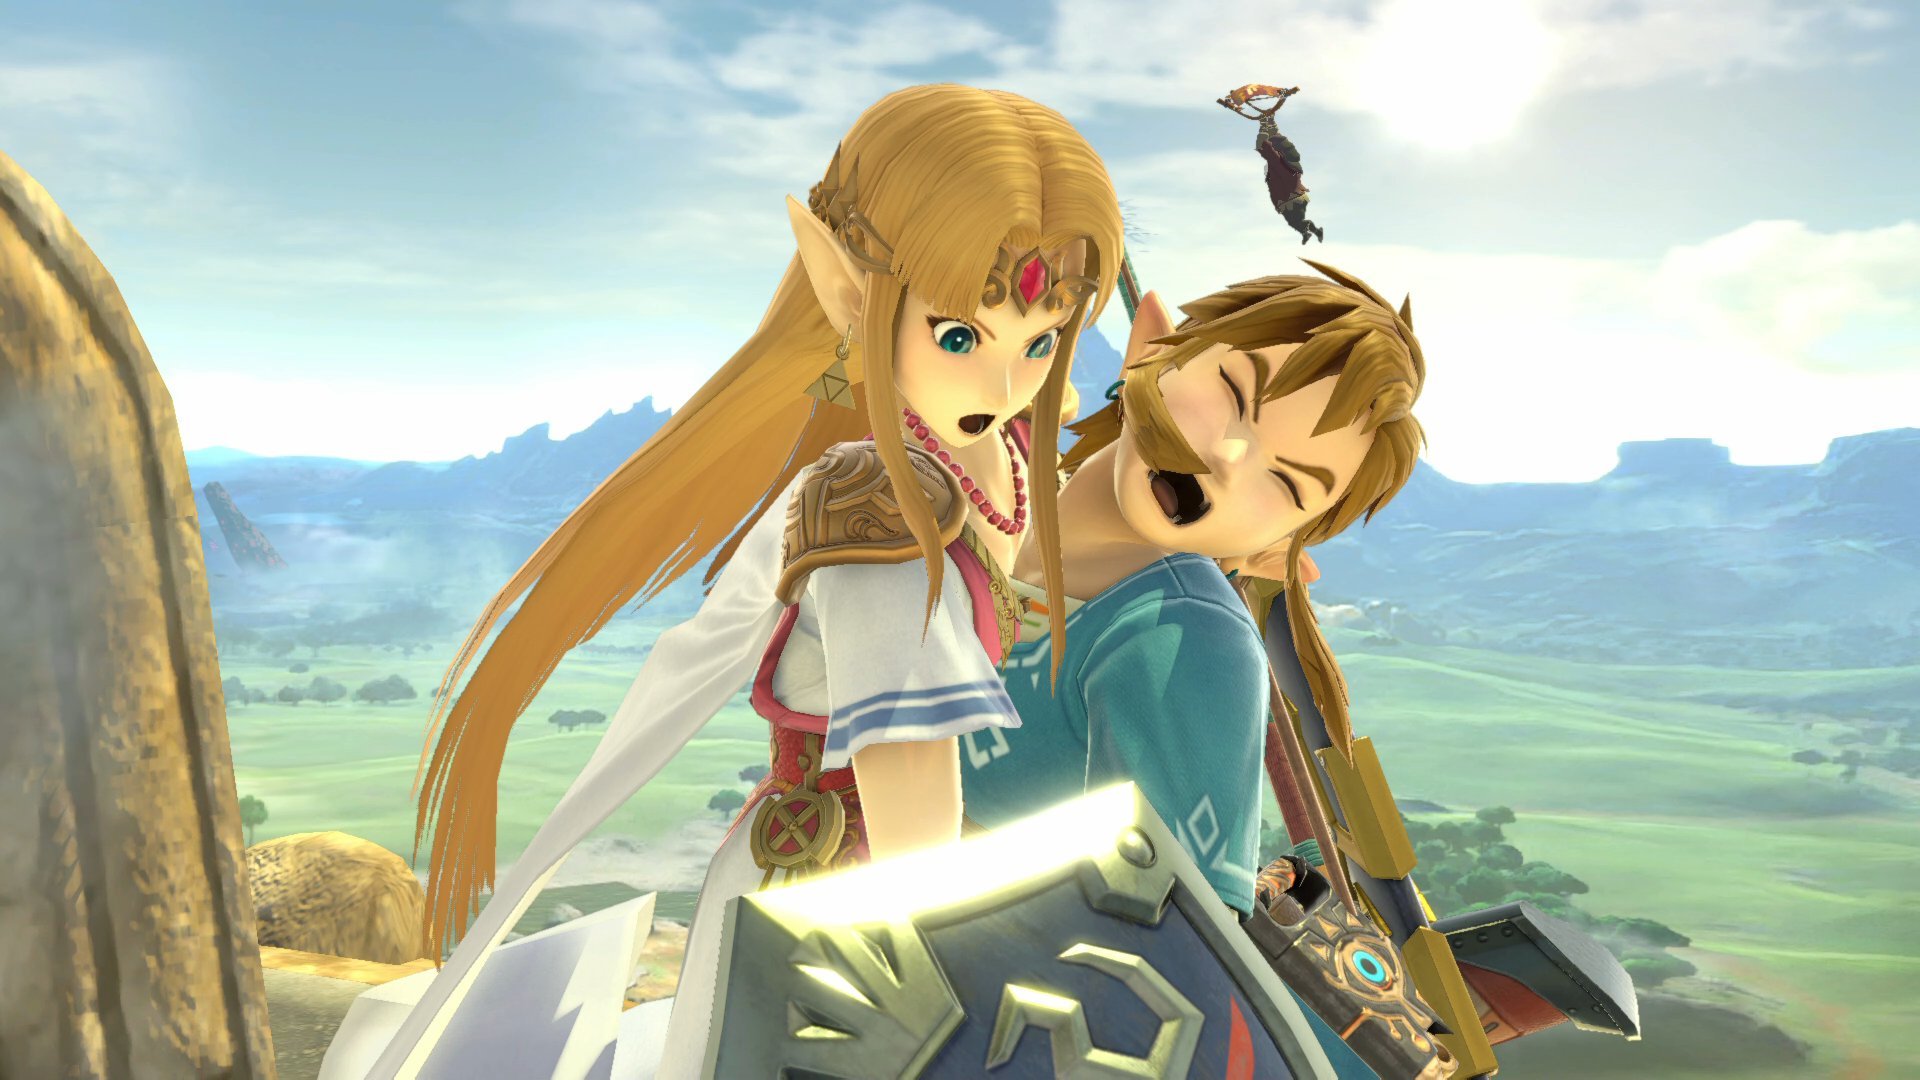 “Horny Zelda on Link #r34 Kappa Smash Bros Ultimate #gaming https://t.co/rE...